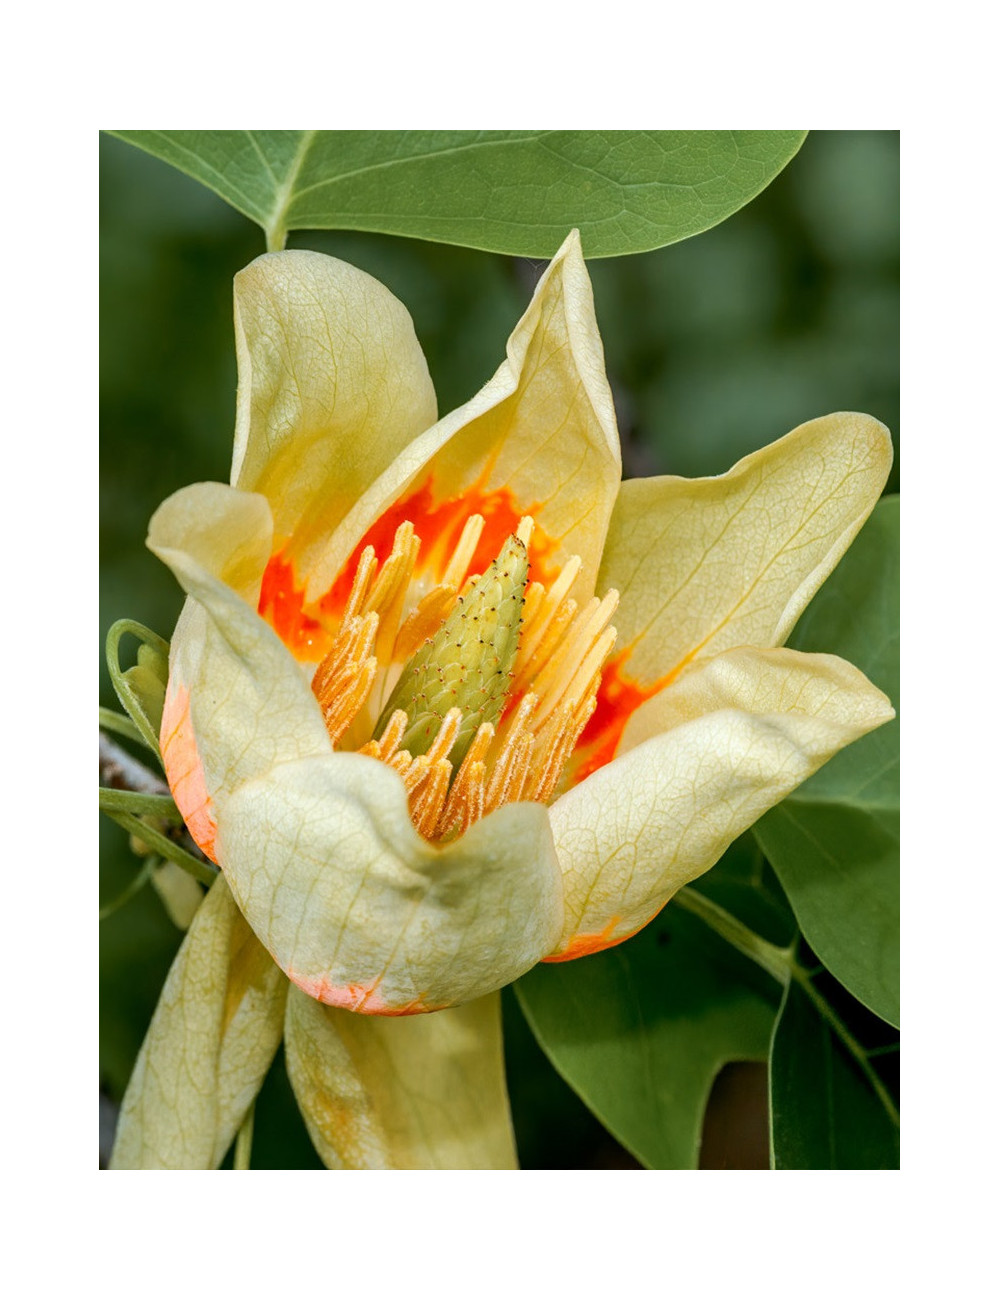 LIRIODENDRON tulipifera EDWARD GURSZTYN (Tulipier de Virginie)